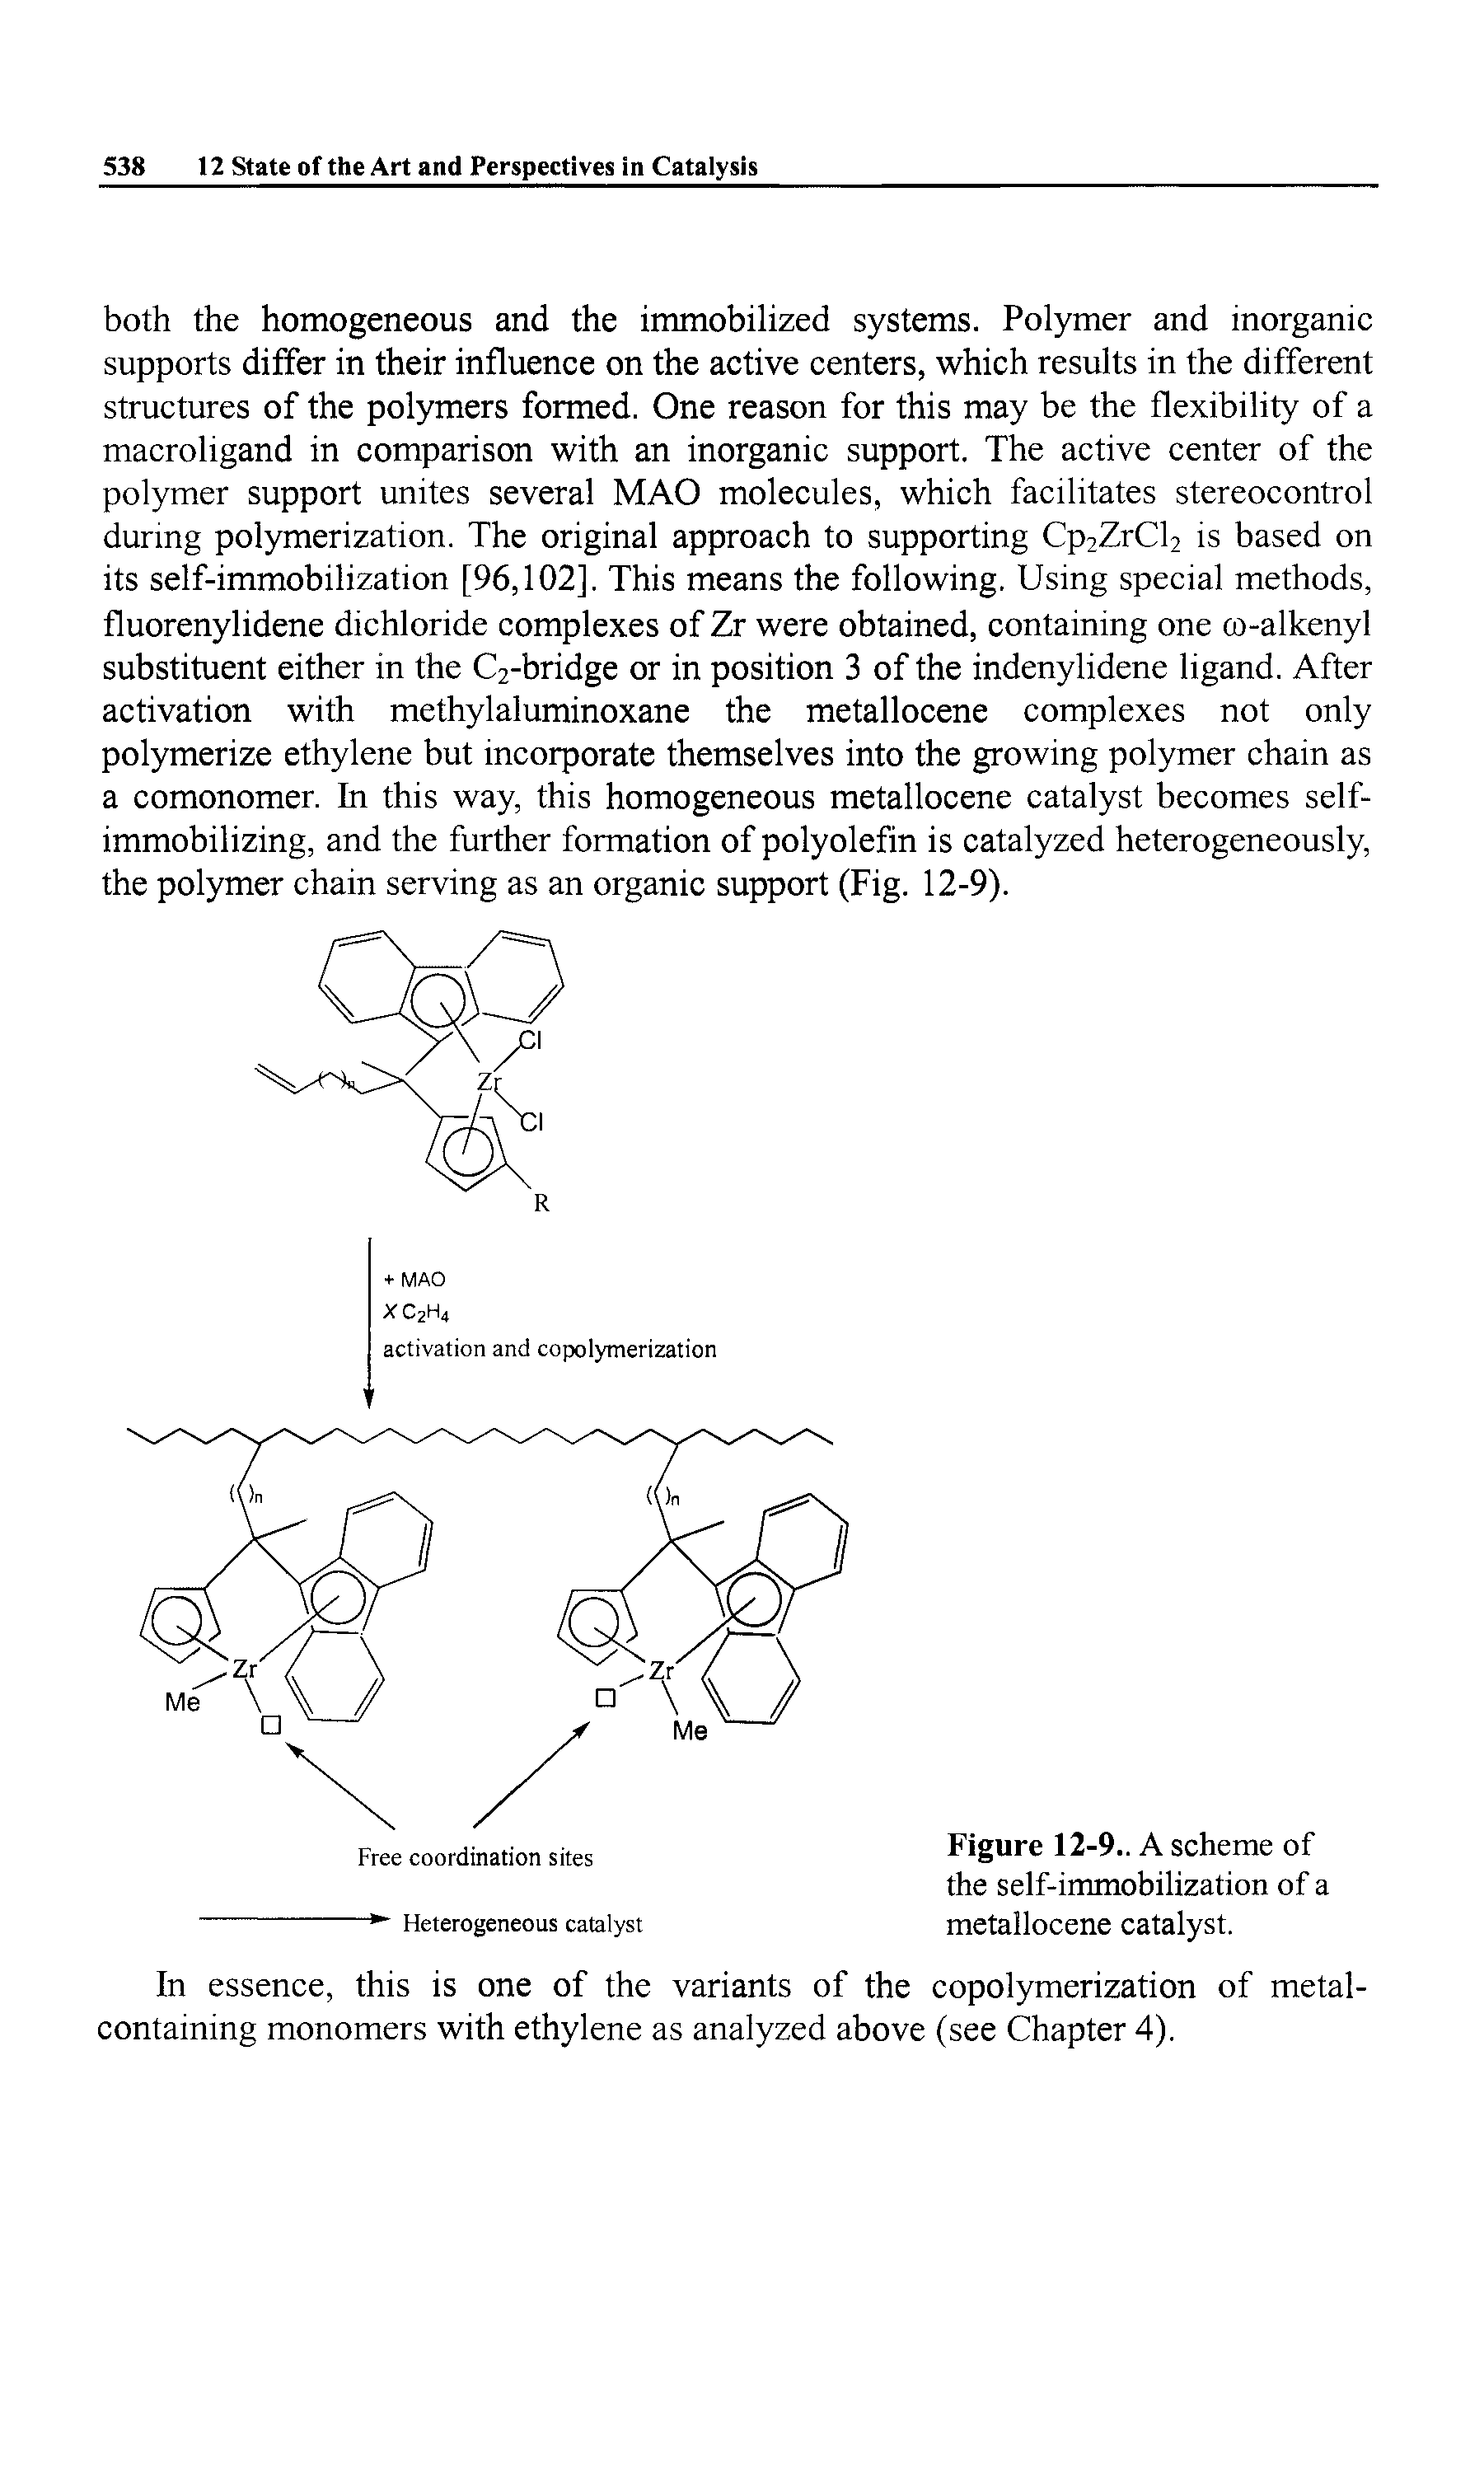 Figure 12-9.. A scheme of the self-immobilization of a metallocene catalyst.